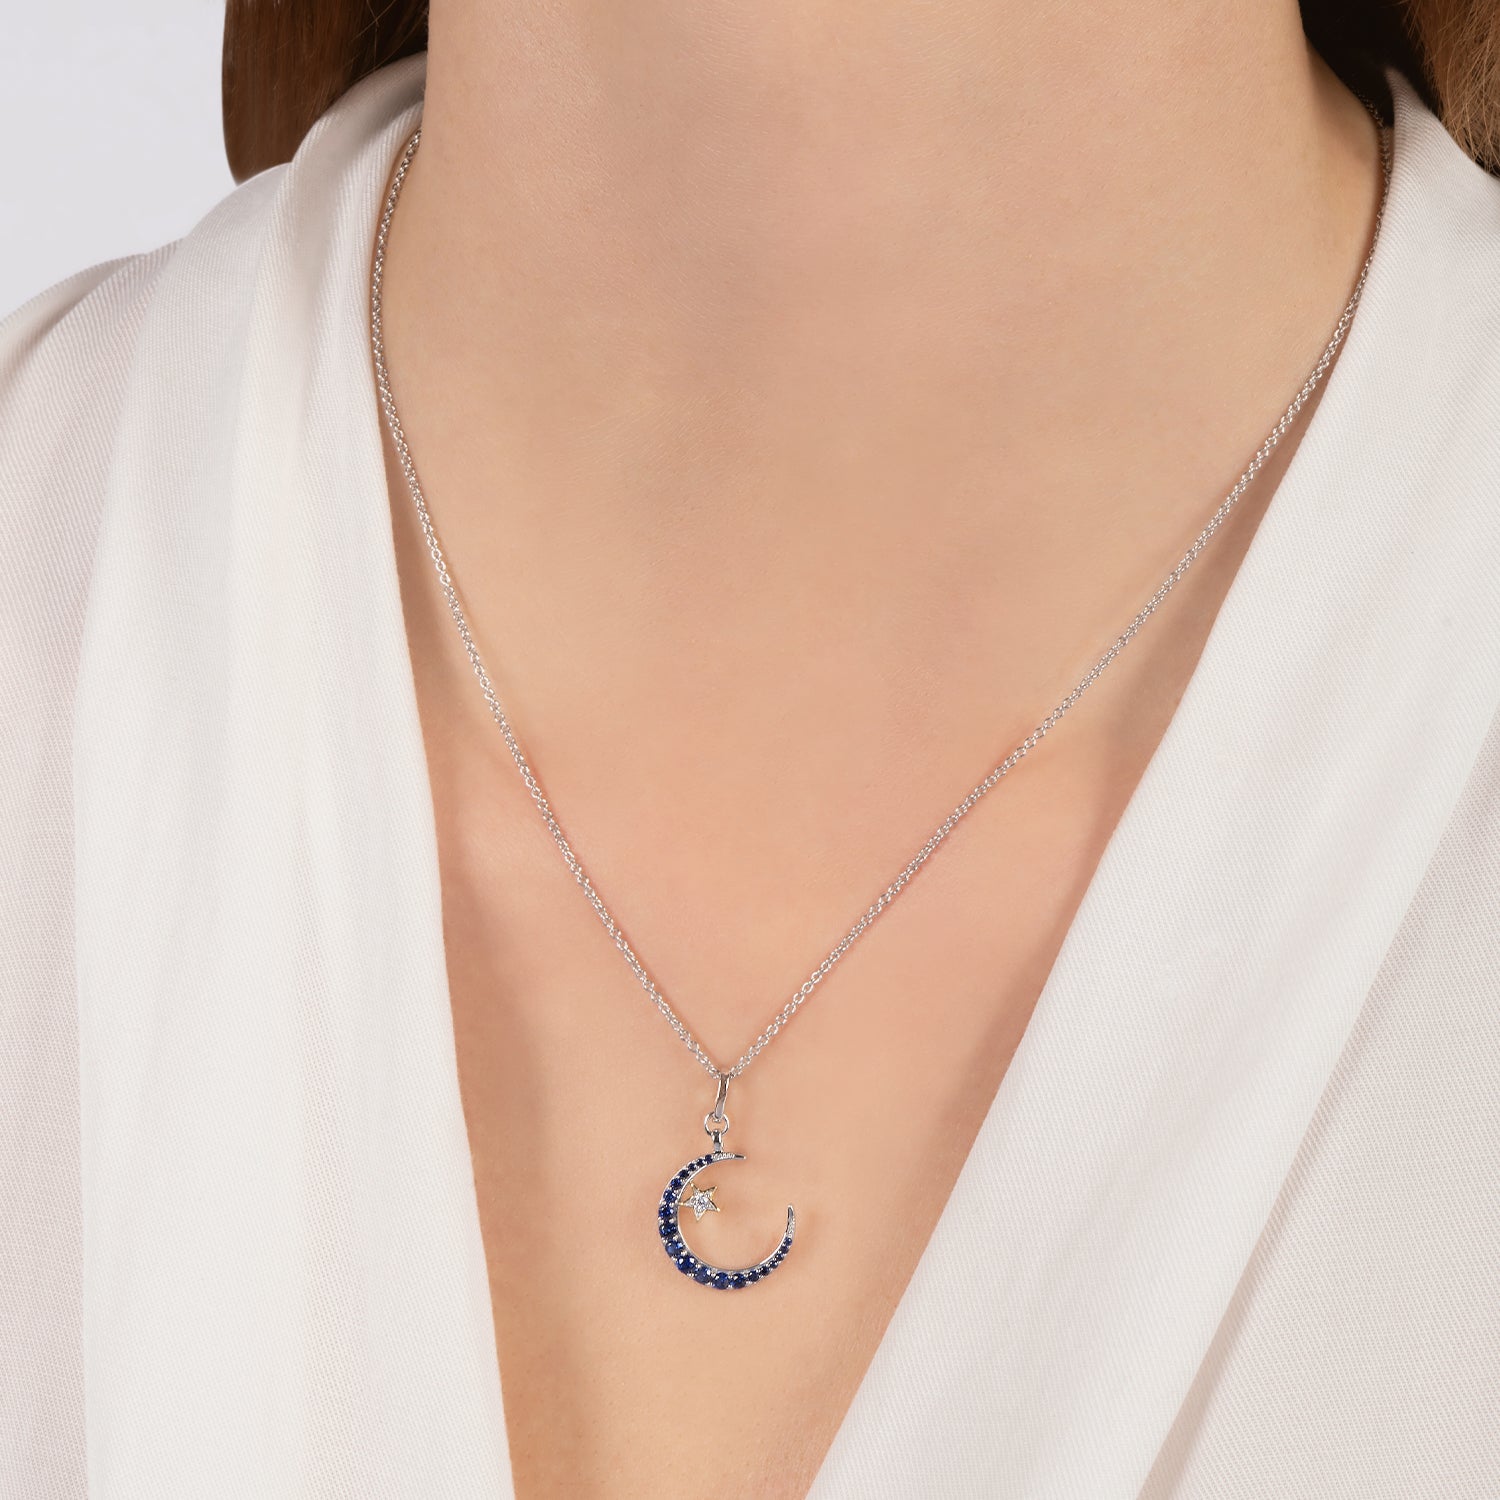 14kt gold and diamond starlit crescent moon necklace | Luna Skye